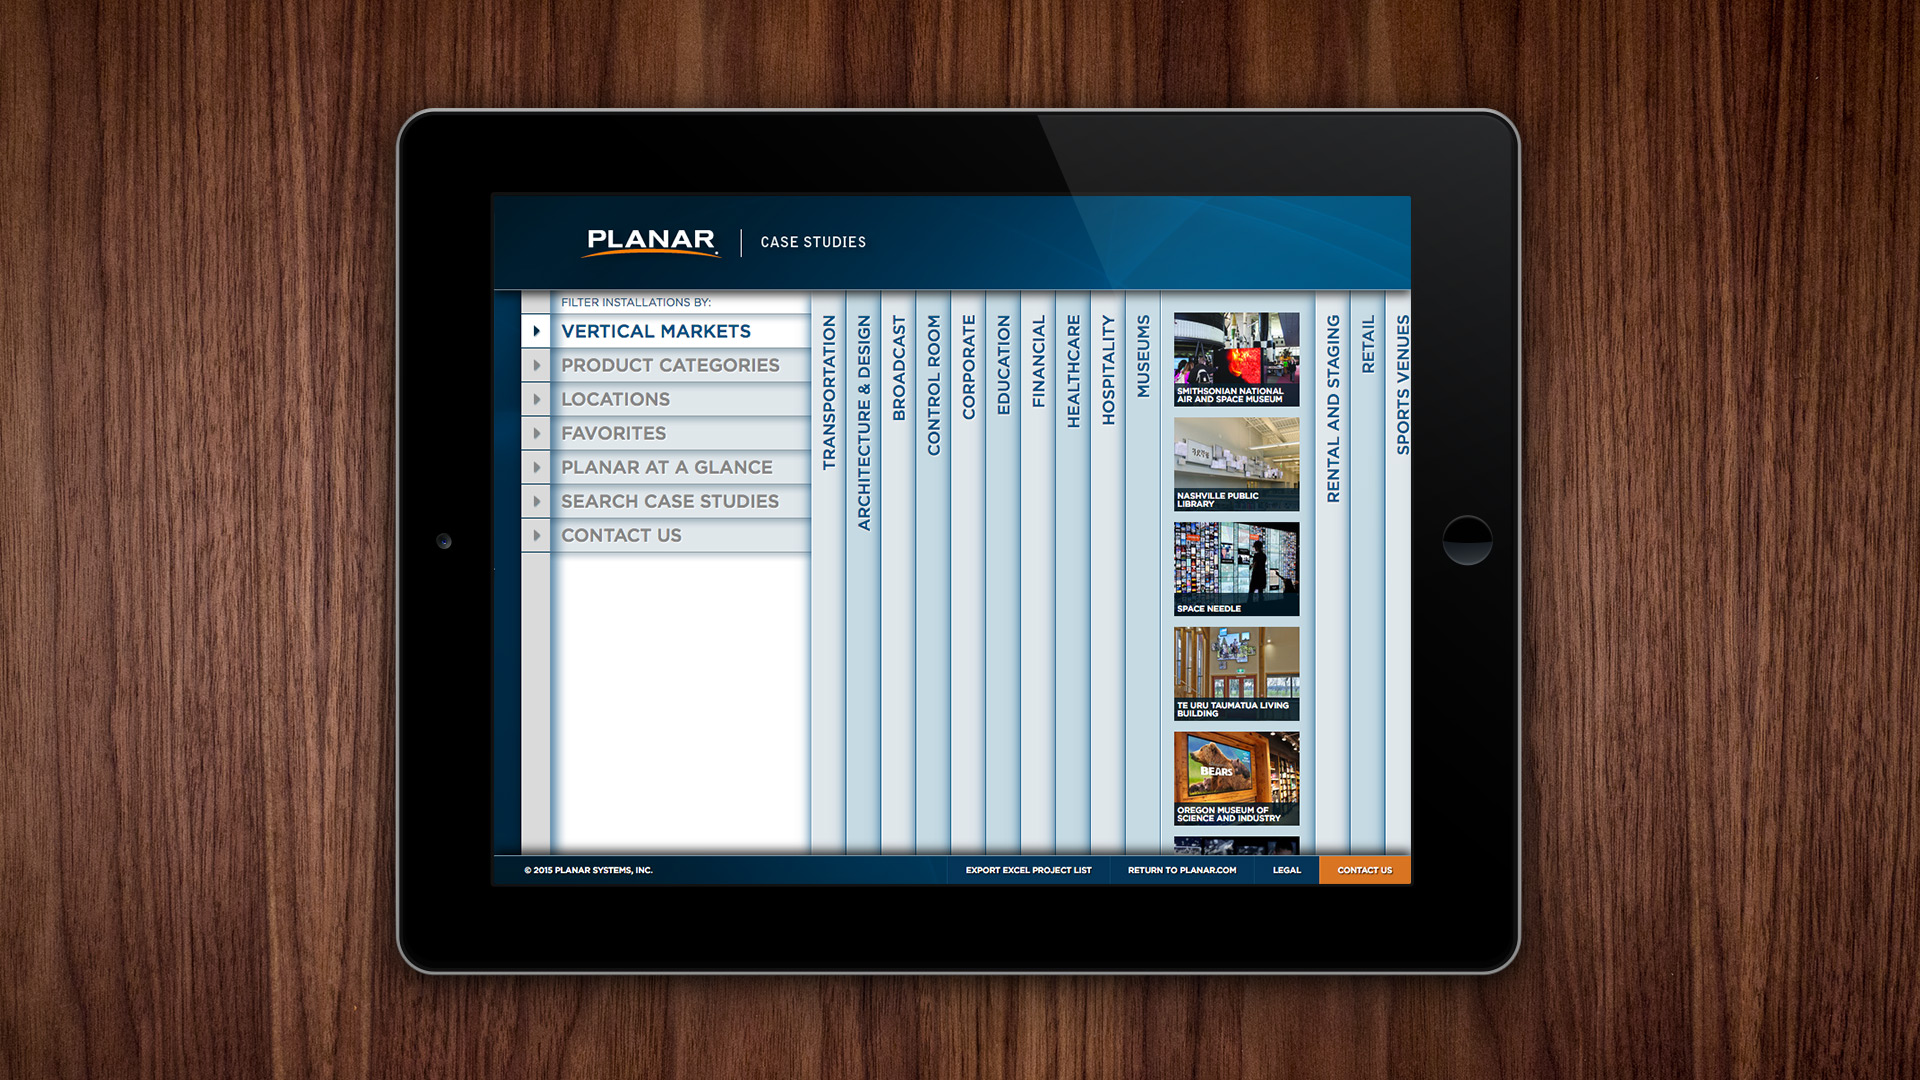 Planar Case Studies webpage on mobile device